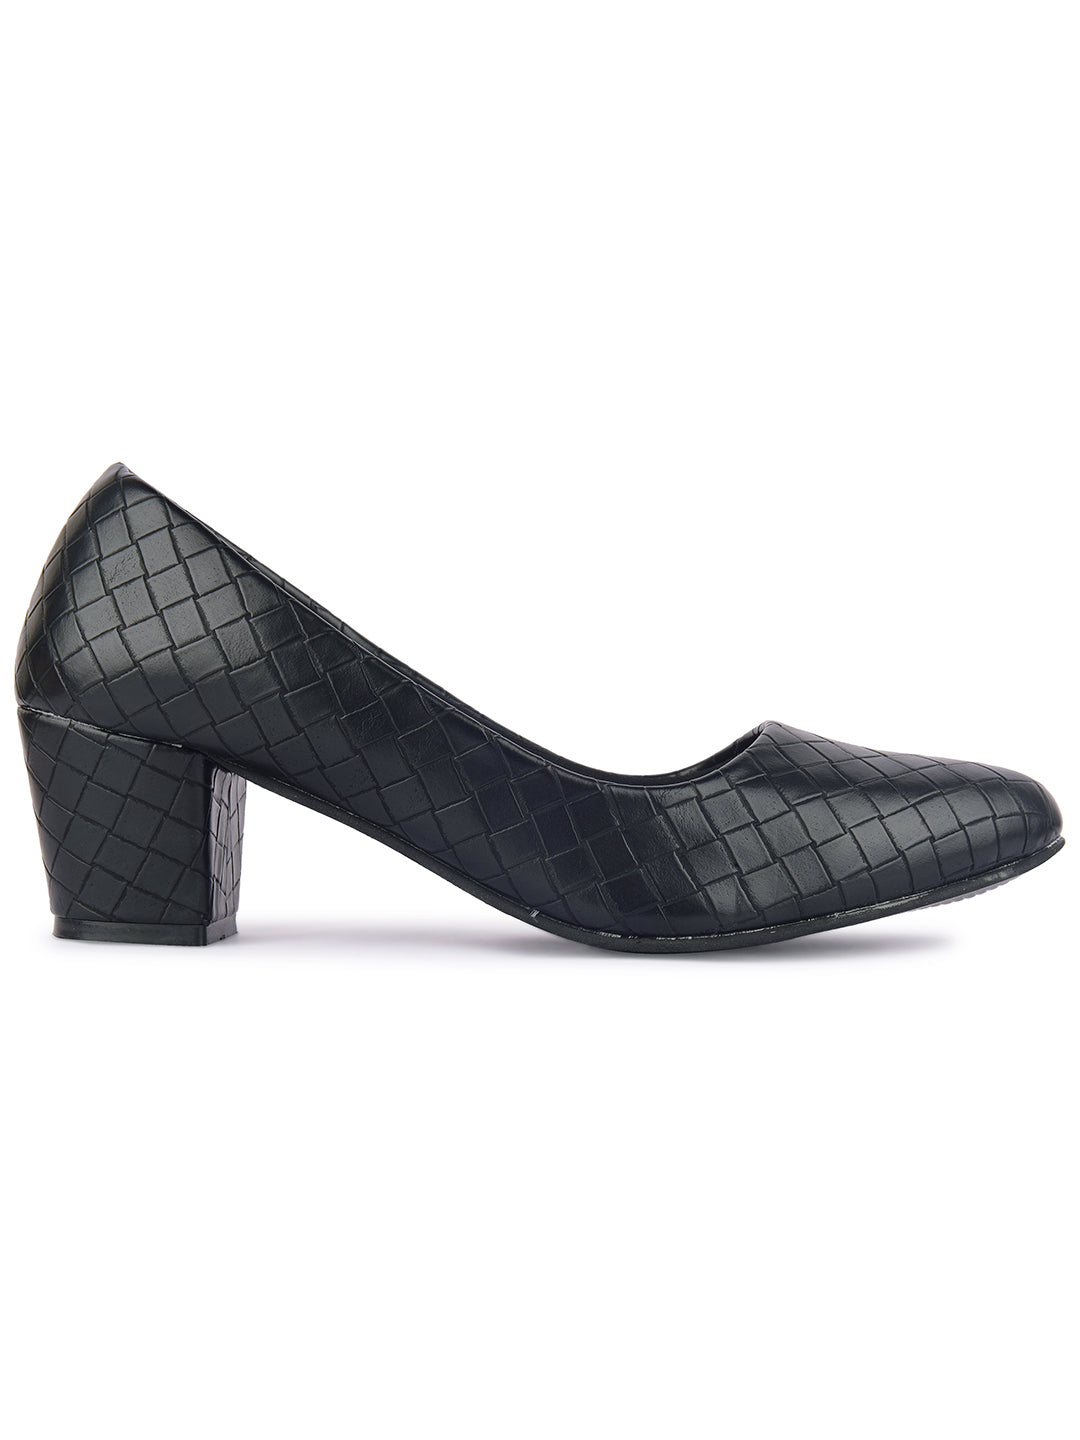 Women Shoes Slip On High Heel Pointed Toe Stiletto Evening Stiletto Dress  Formal | eBay